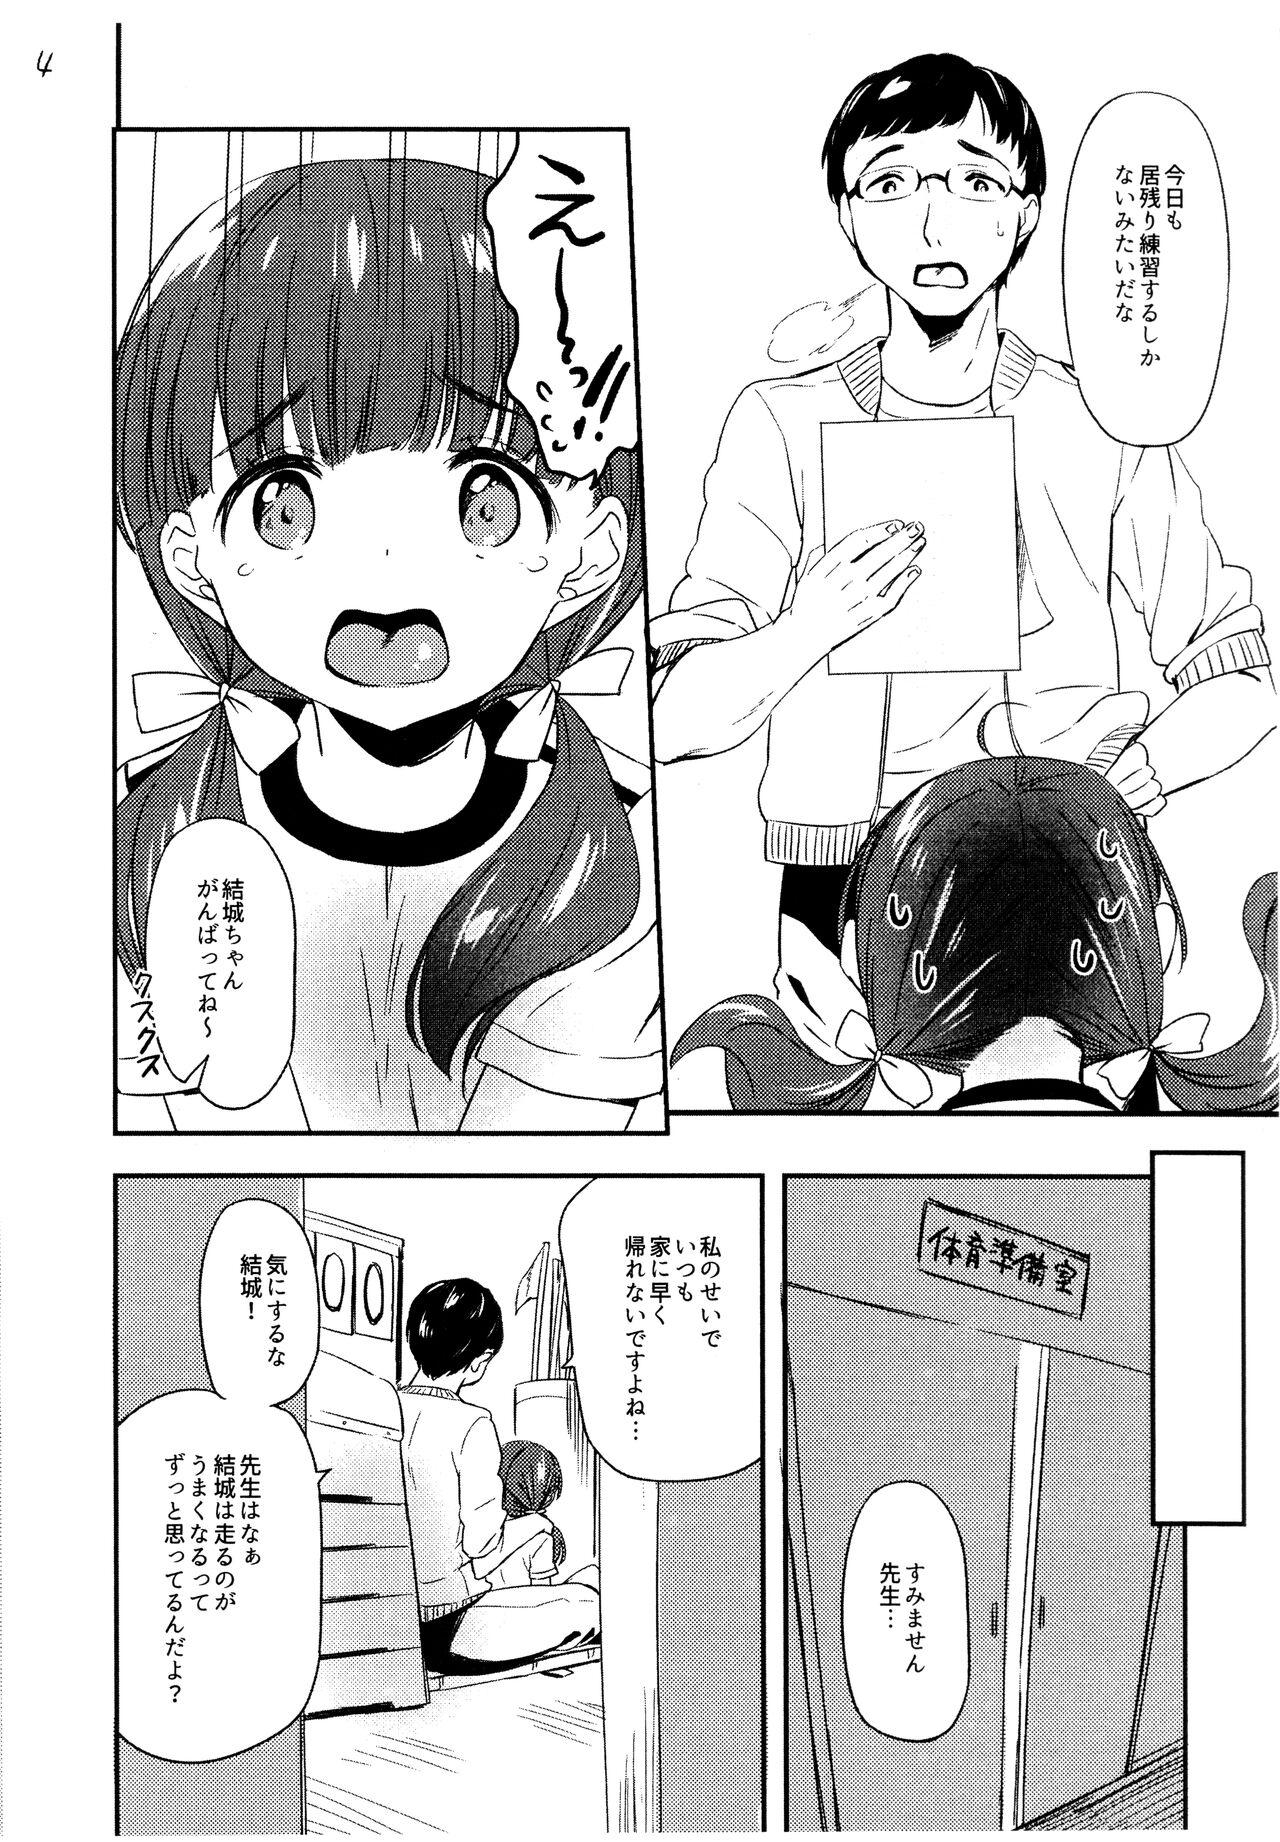 Adolescente Omiashi Training Preview ver. - Original Longhair - Page 3